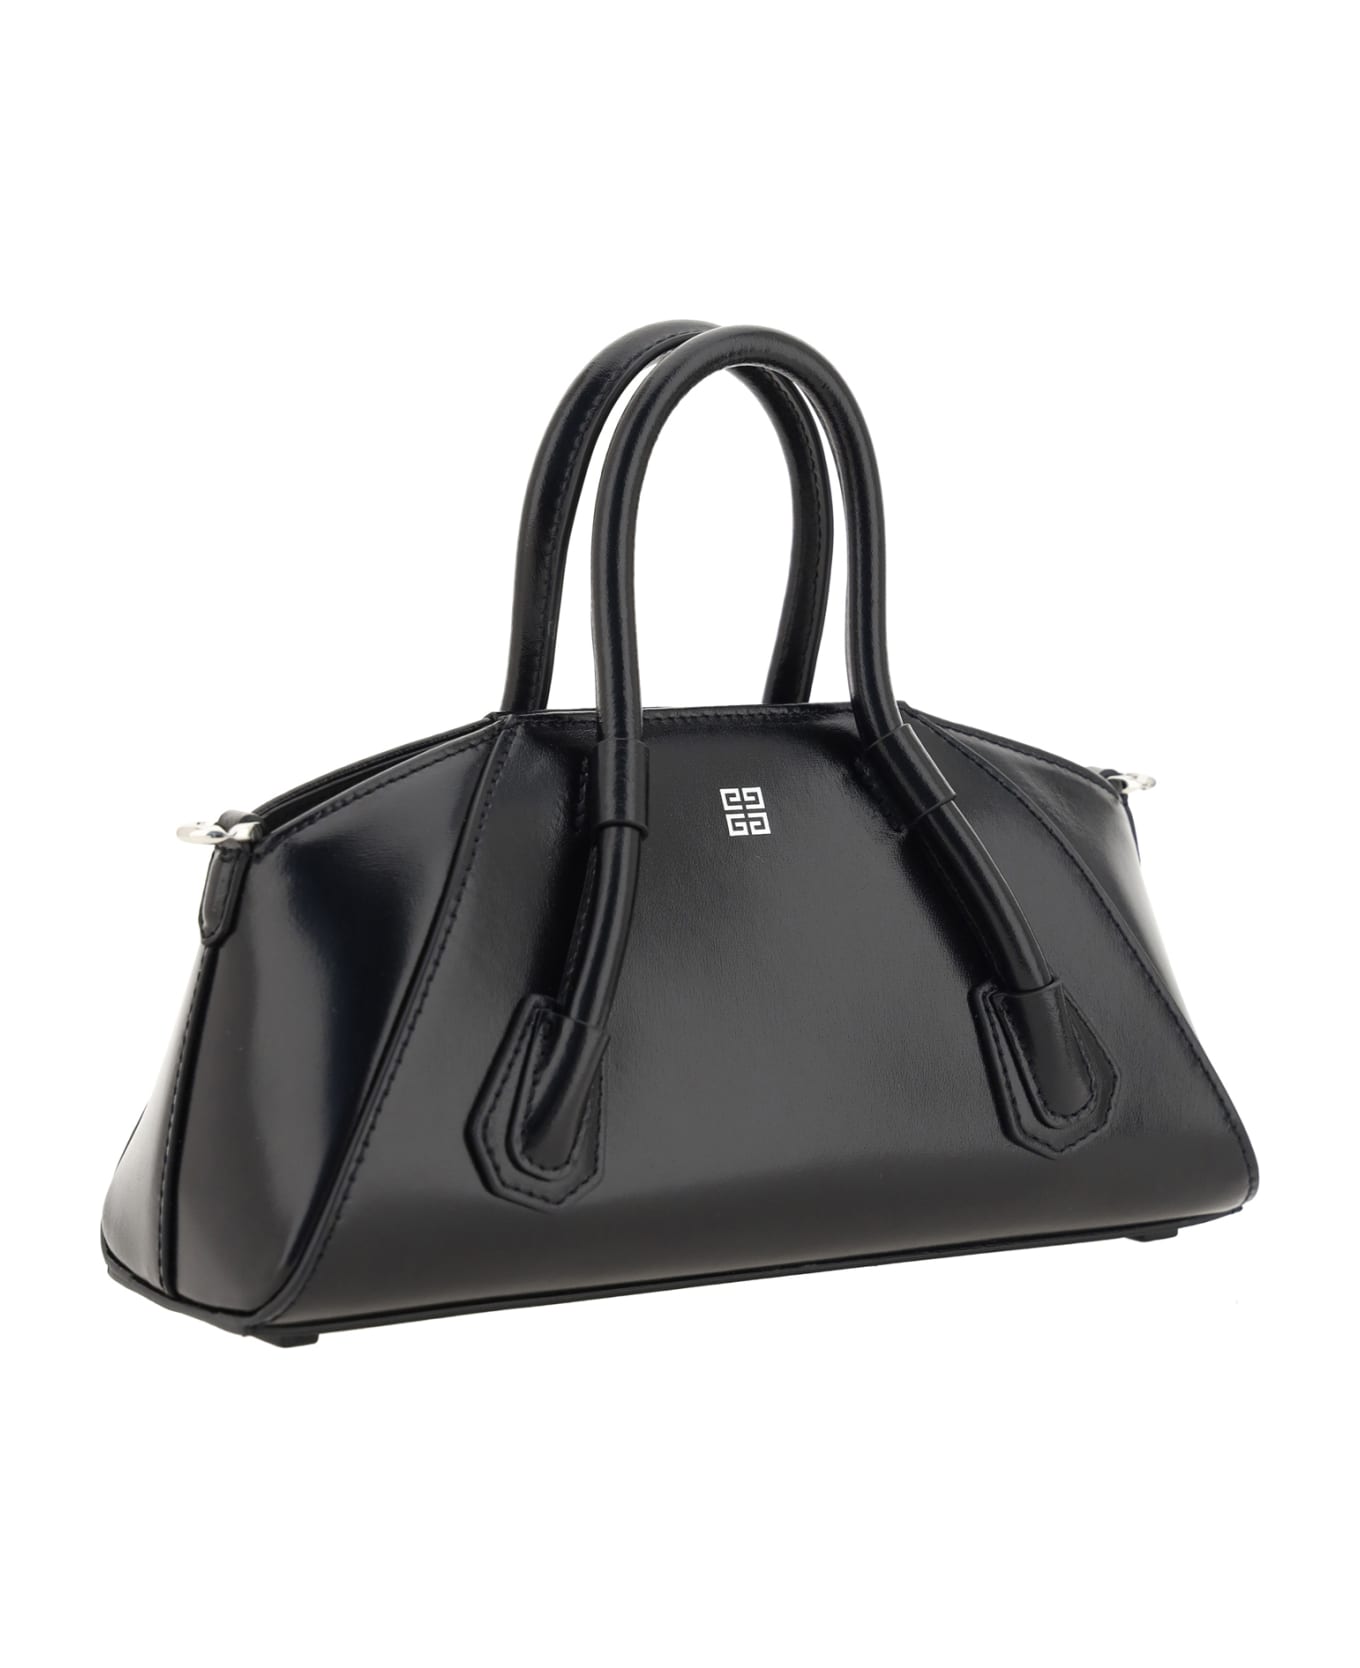 Givenchy Antigona Stretch Mini Bag - Black